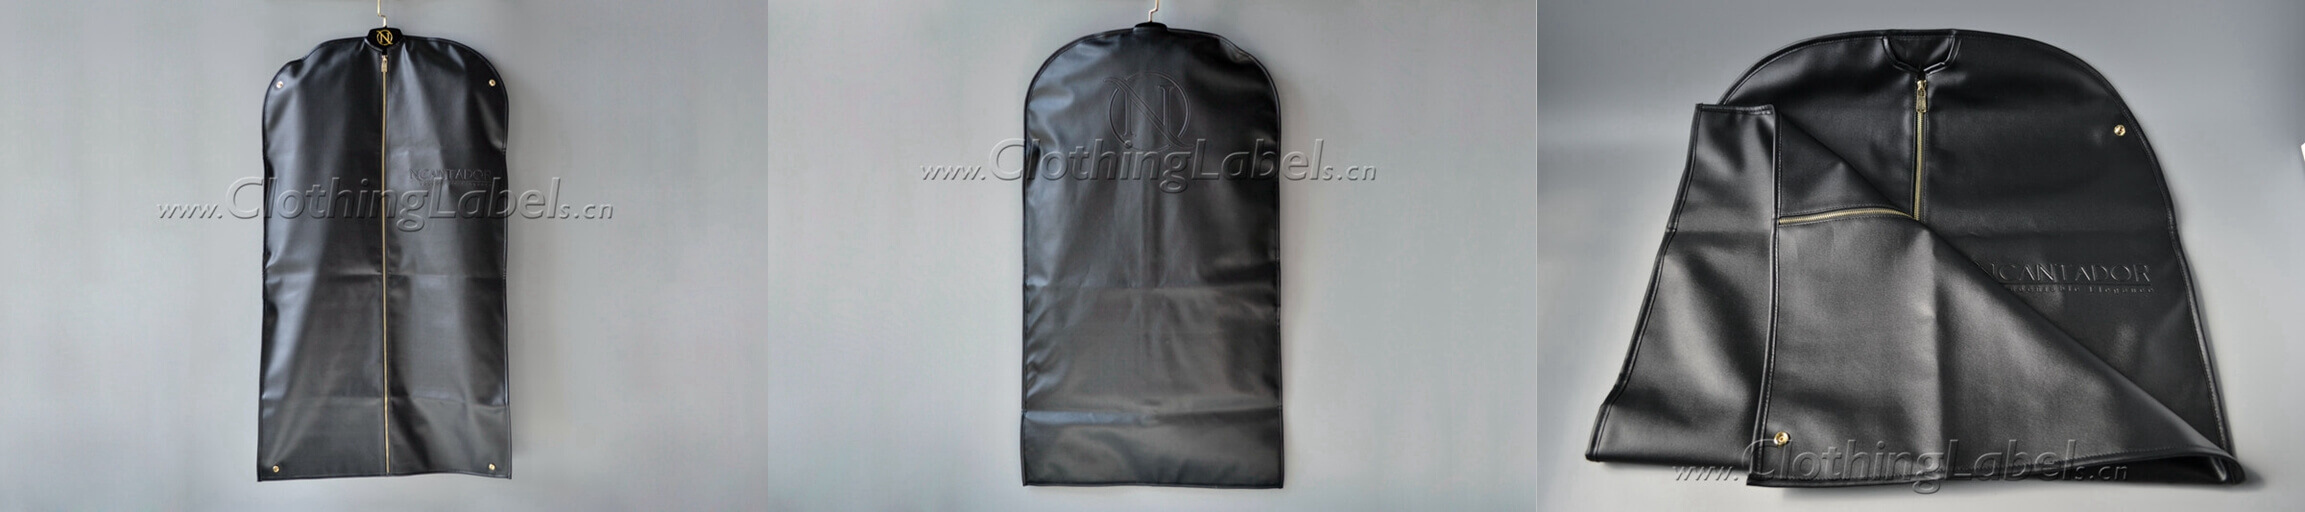 Hanging garment bag